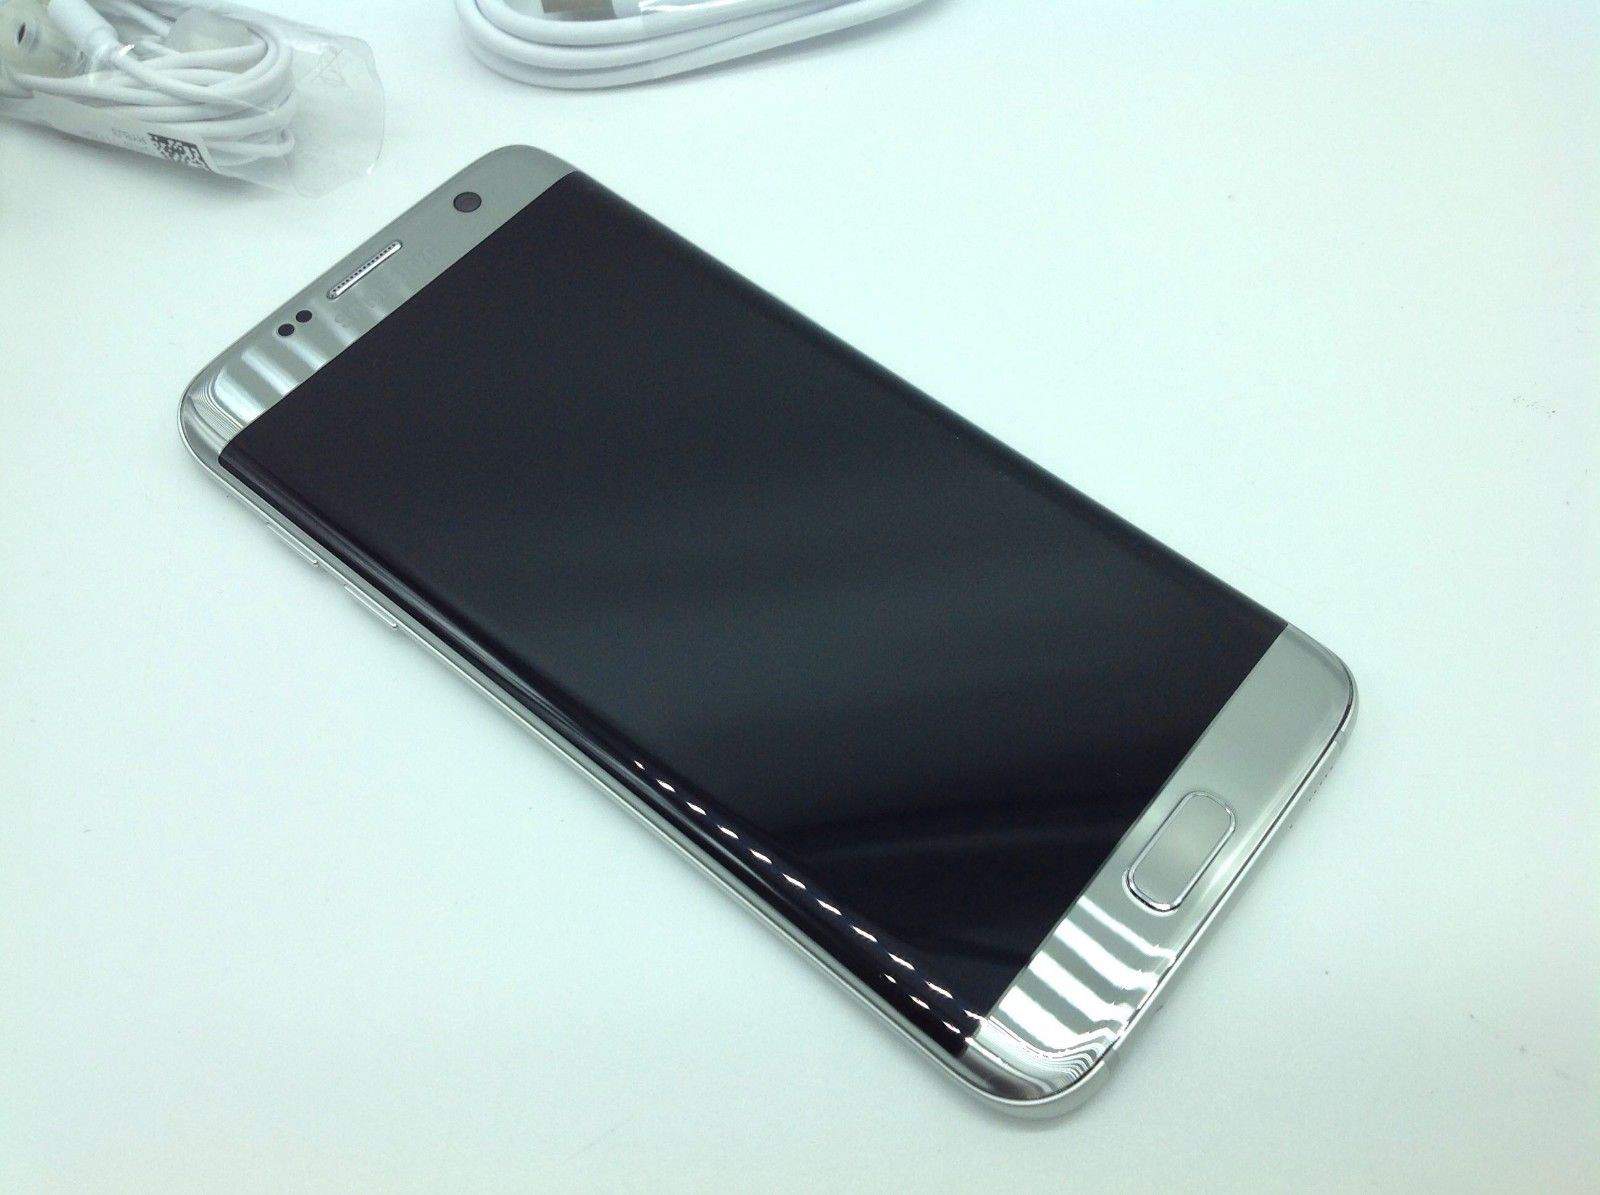 bossen Kreek debat Samsung Galaxy S7 Edge Silver GSM Unlocked - My iPhone Repair